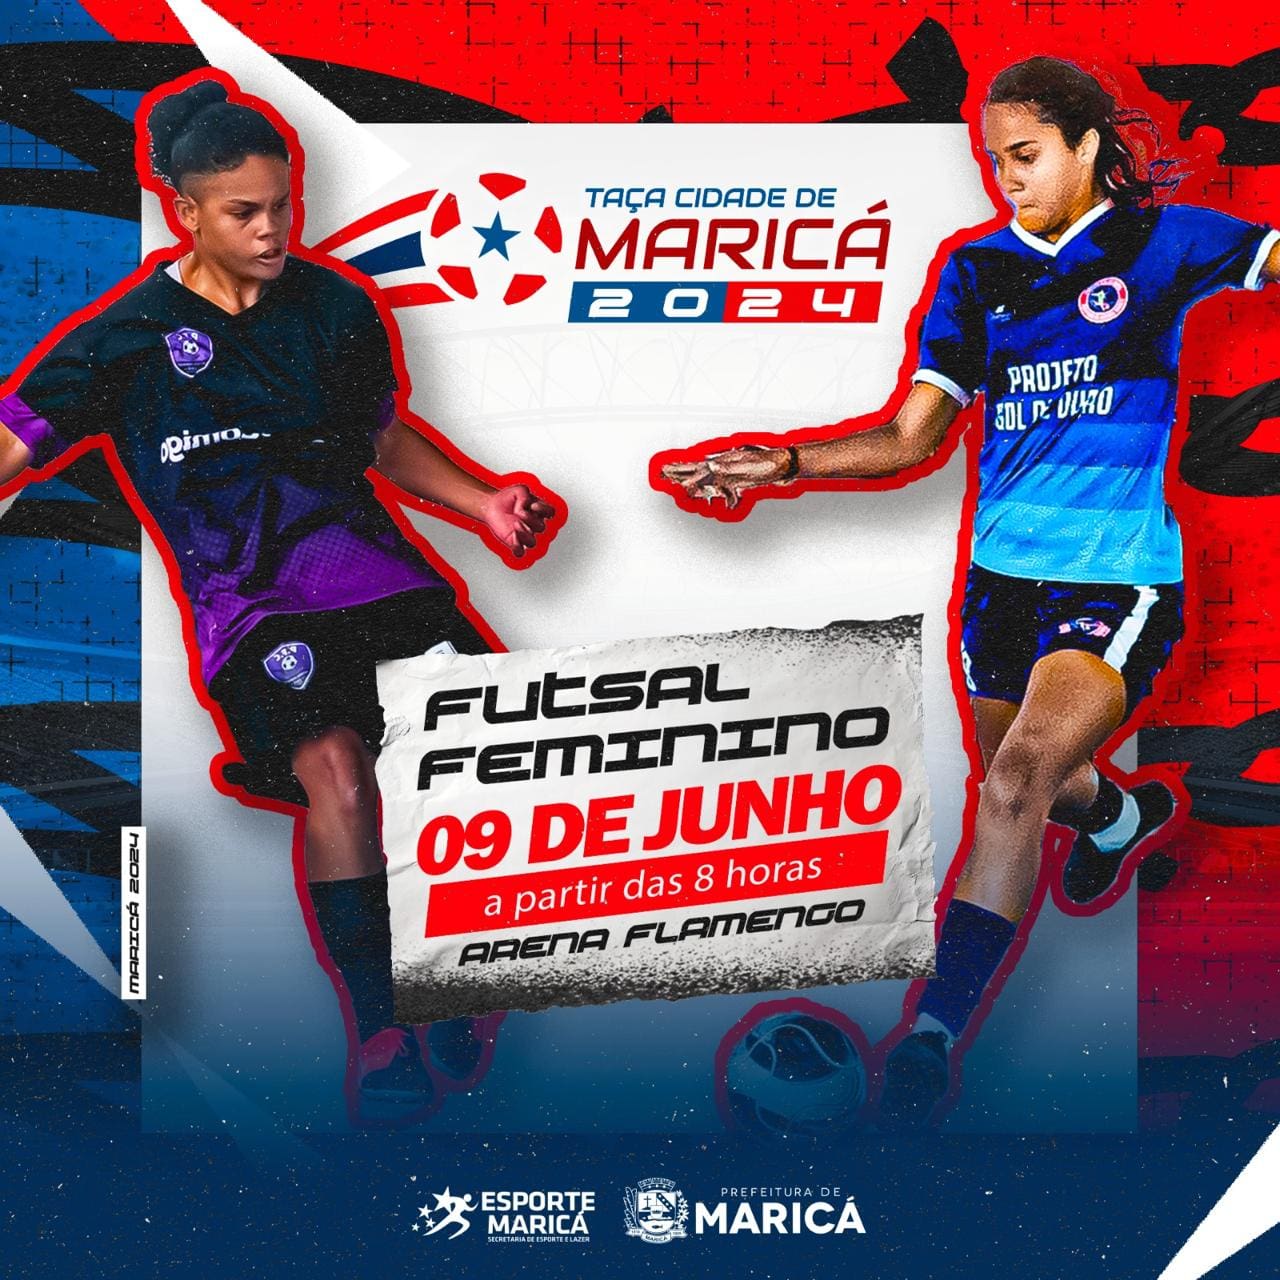 Taça Cidade de Maricá 2024 de futsal feminino acontece neste domingo (09/06)